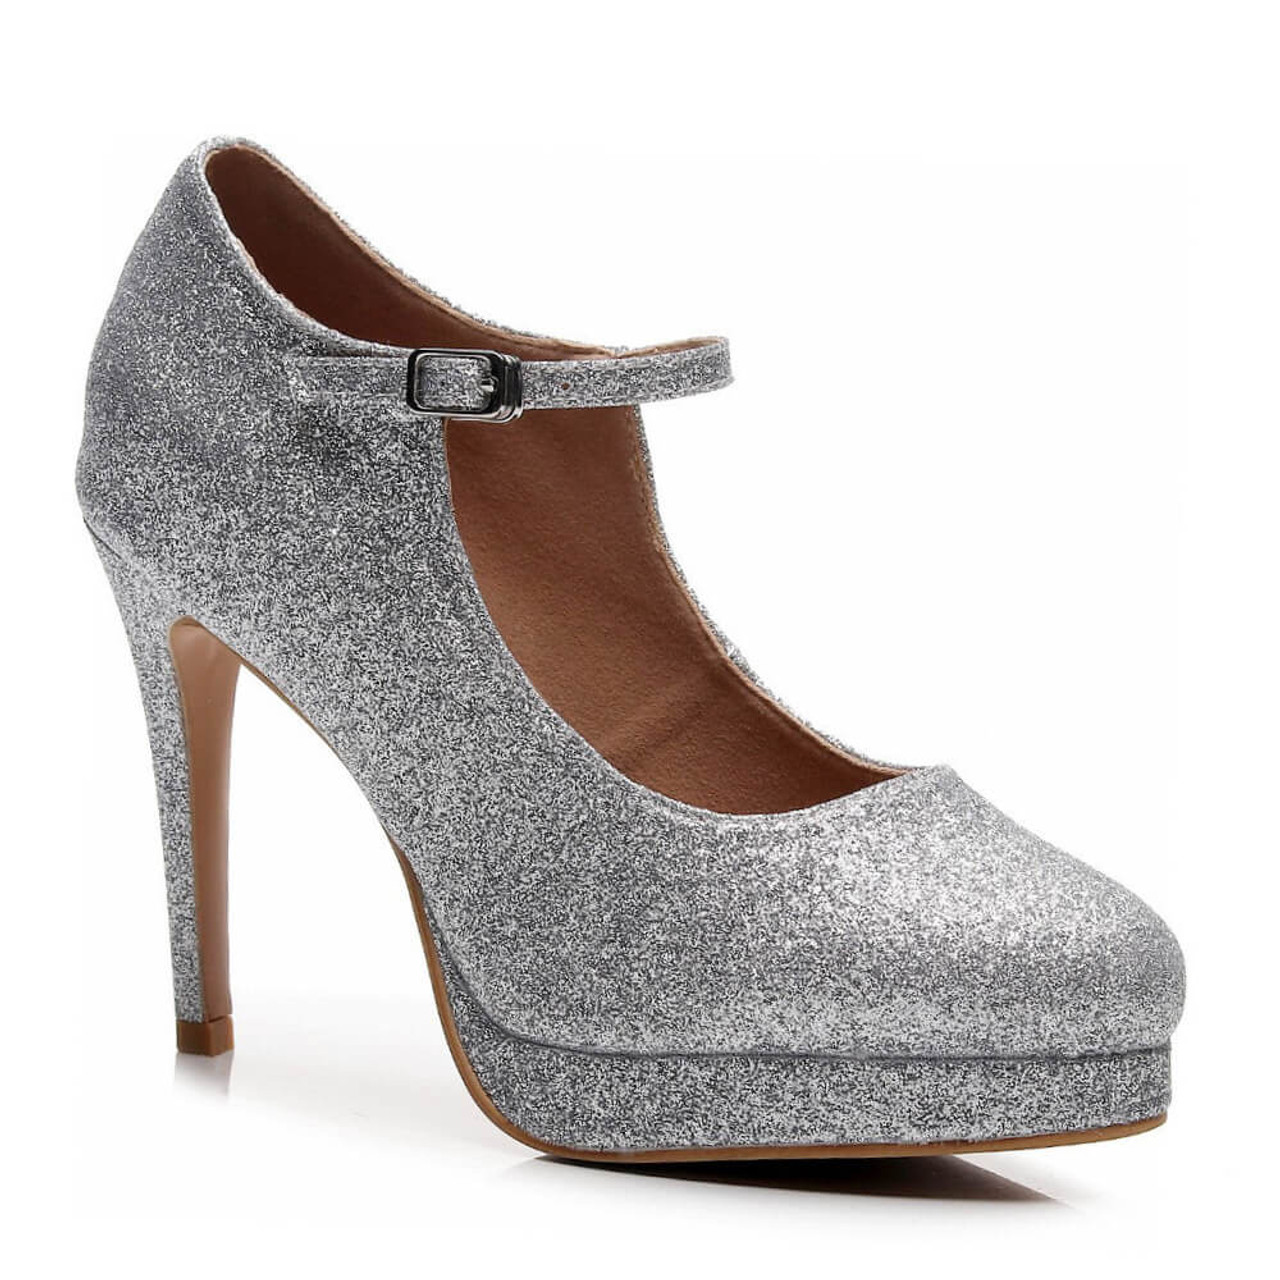 Buy Women Silver Party Pumps Online | SKU: 54-4876-27-36-Metro Shoes